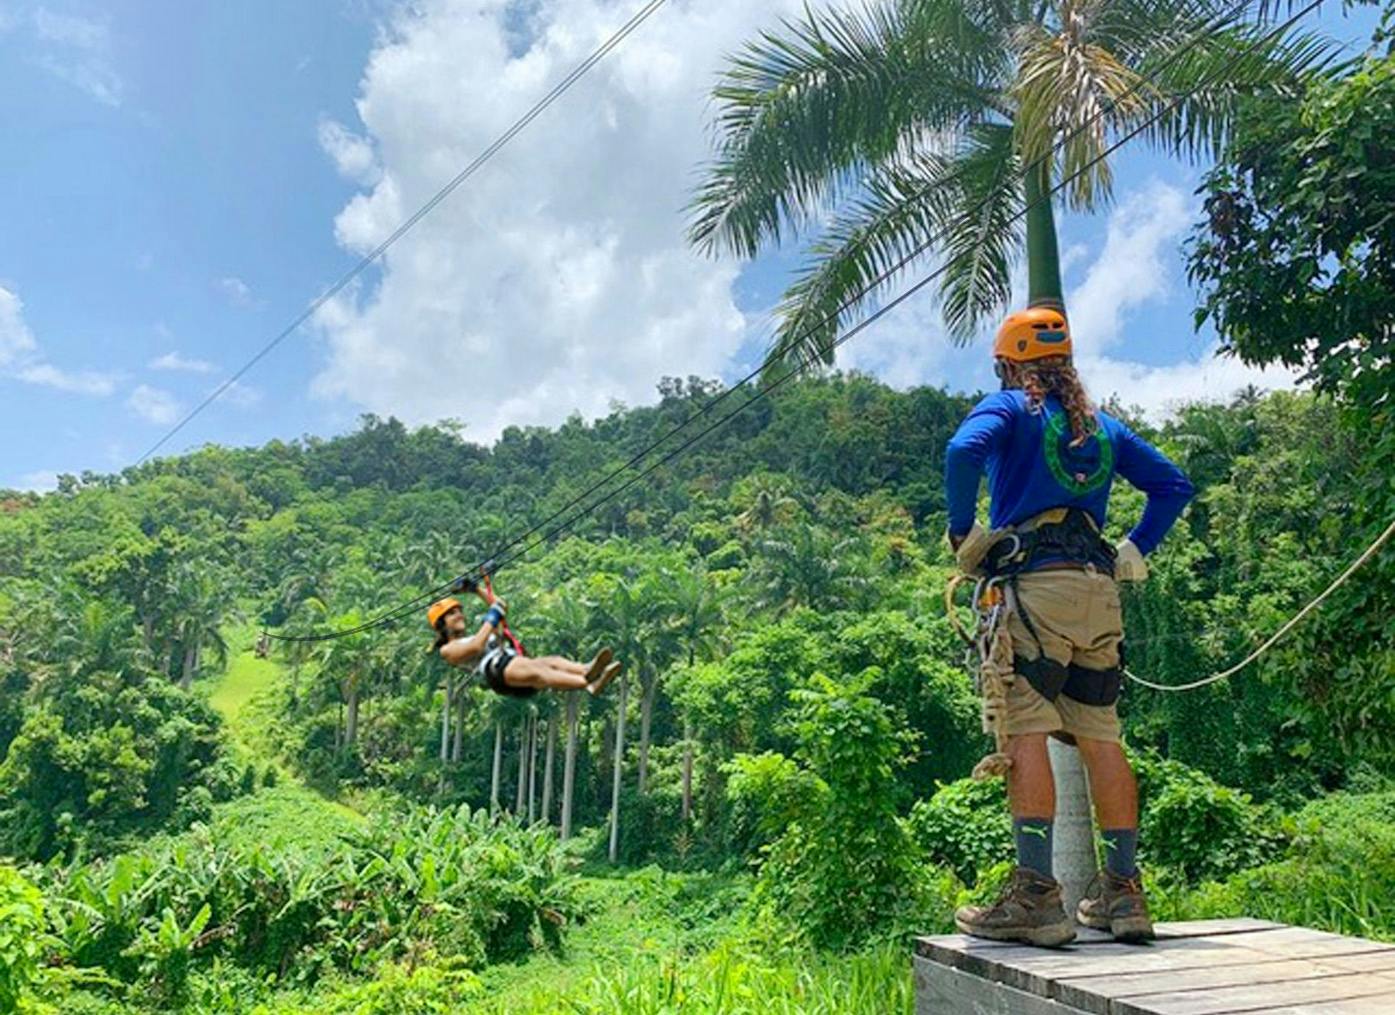 Zip-Lining-Abenteuer im El Yunque-Regenwald